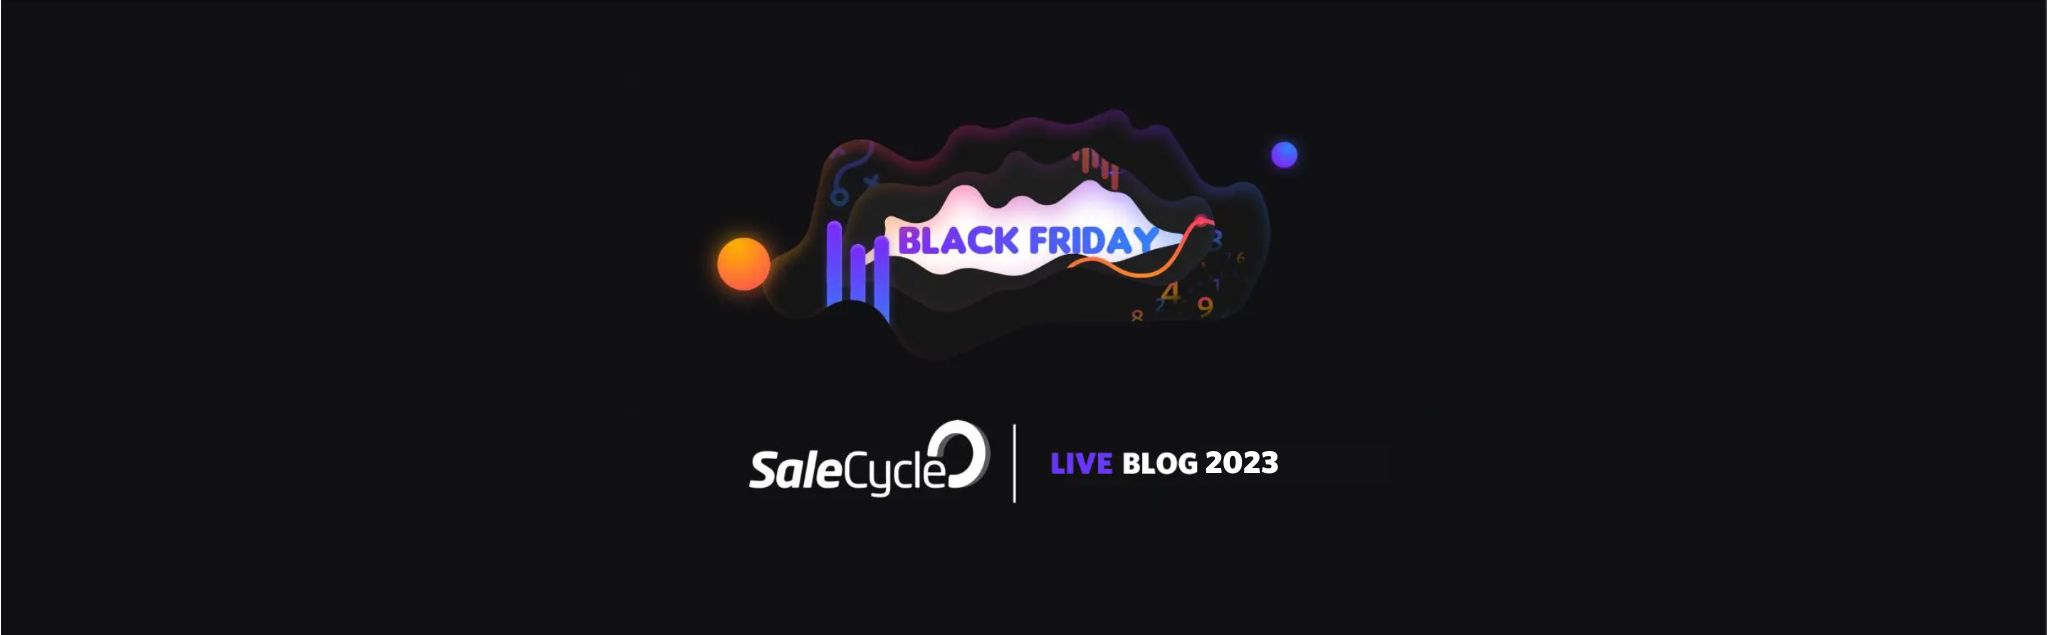 Live Blog sul Black Friday 2023